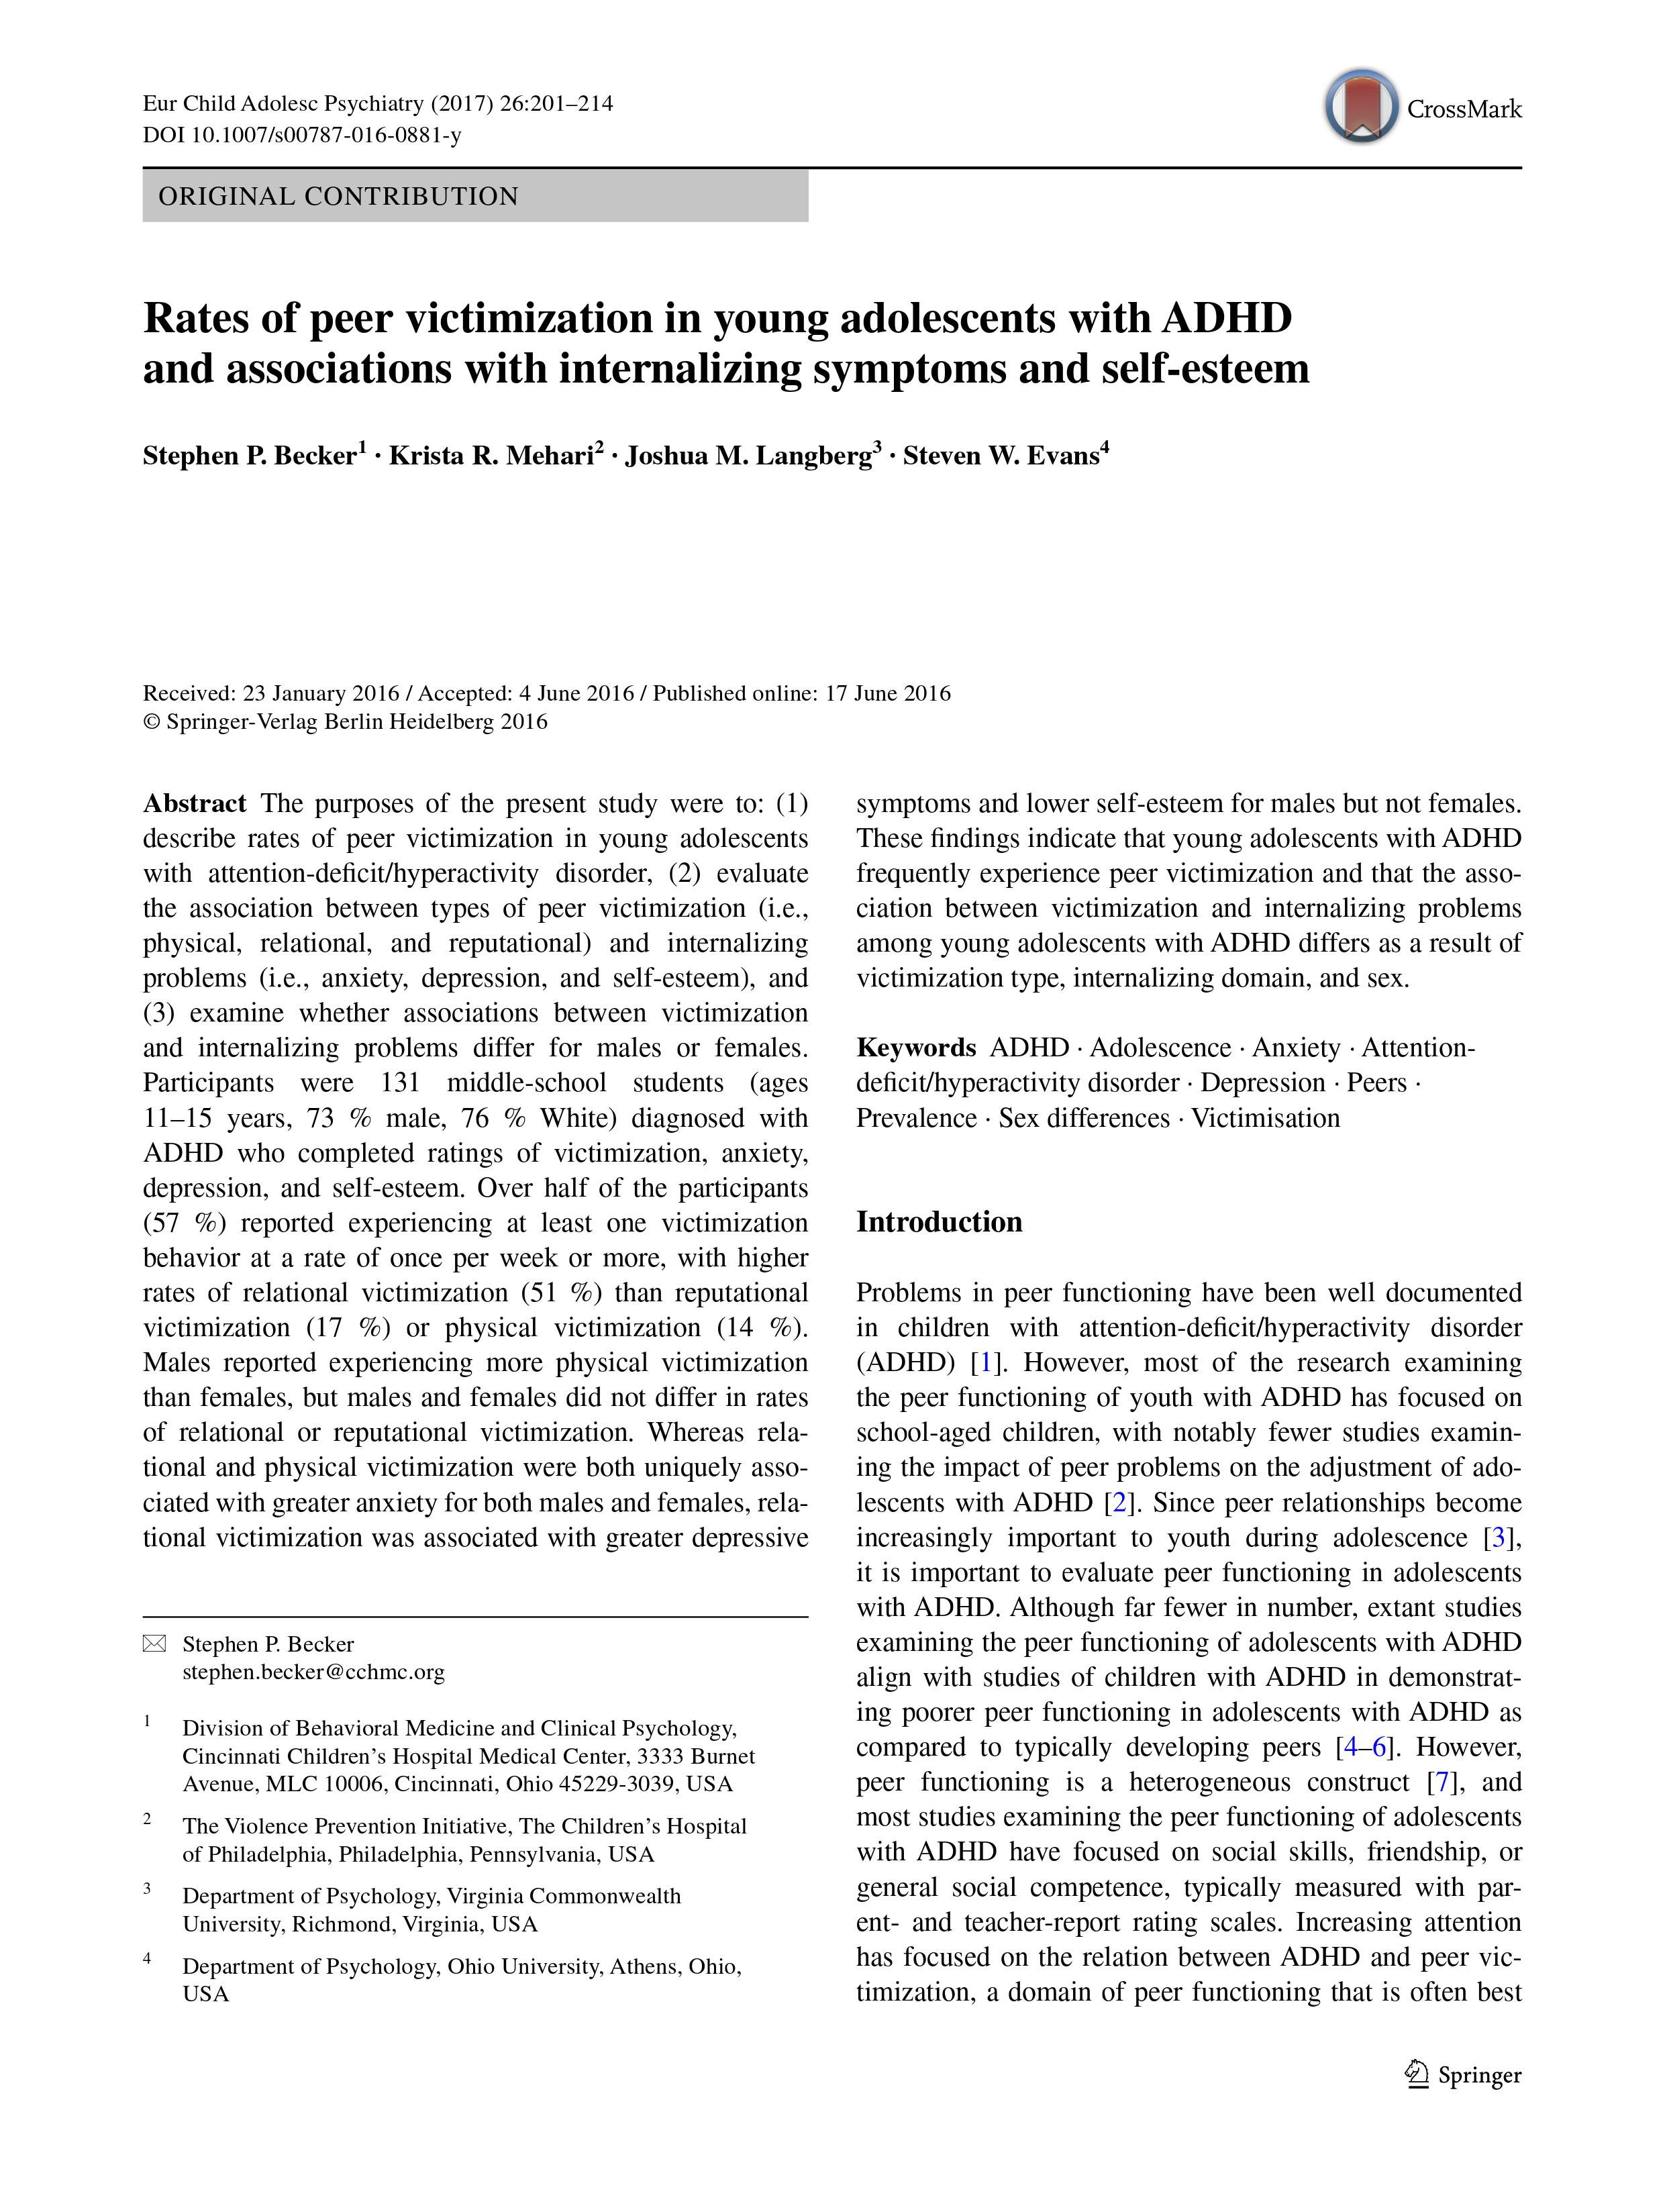 Becker et al (2017) Victimization in teens with ADHD.jpg